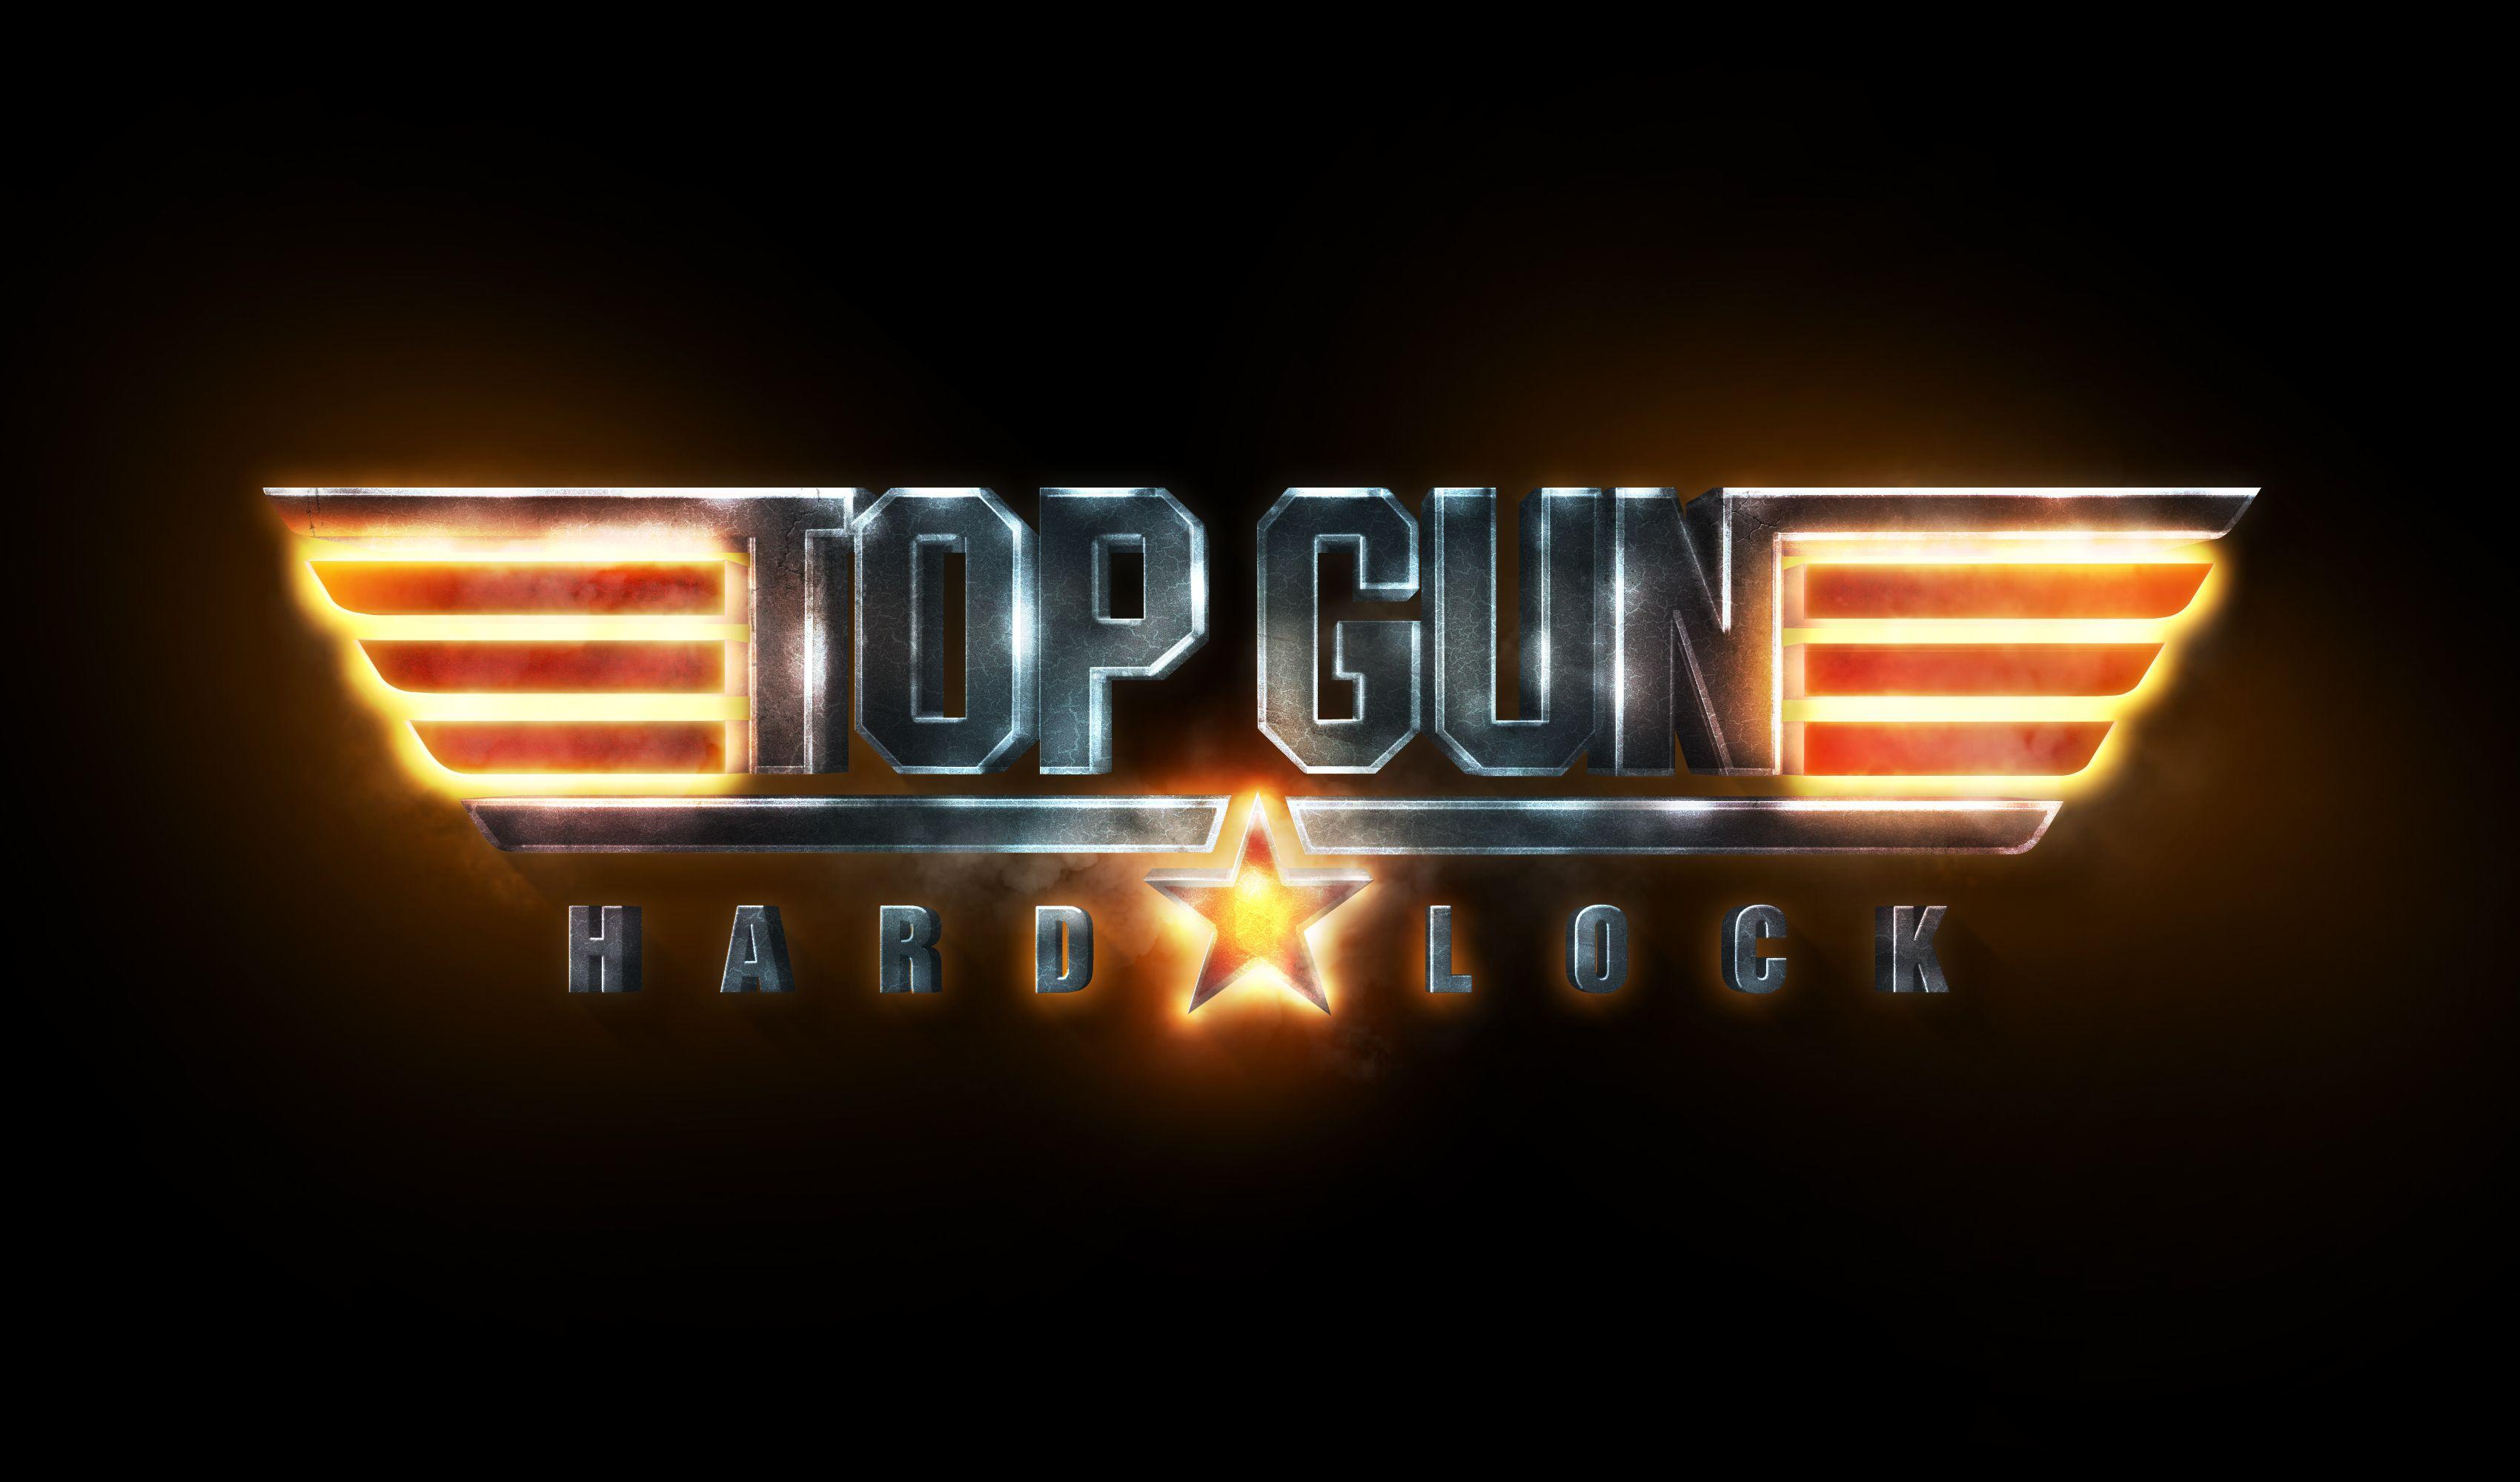 Top Gun: Maverick for windows download free